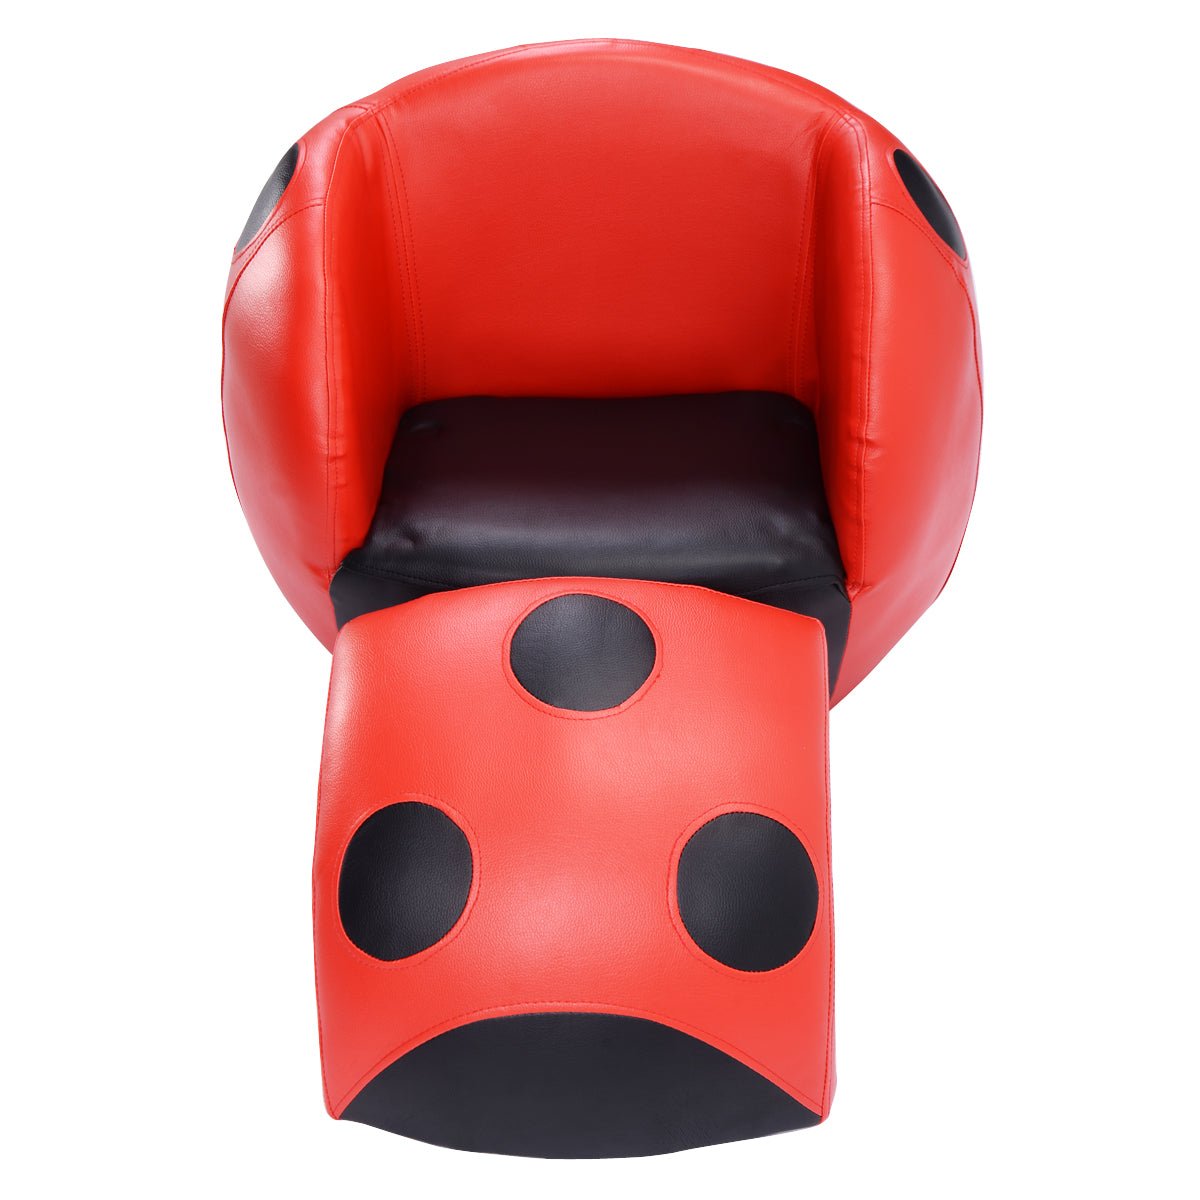 Children's Leisure Armchair: Ladybug Shaped Chair, Waterproof PVC Fabric